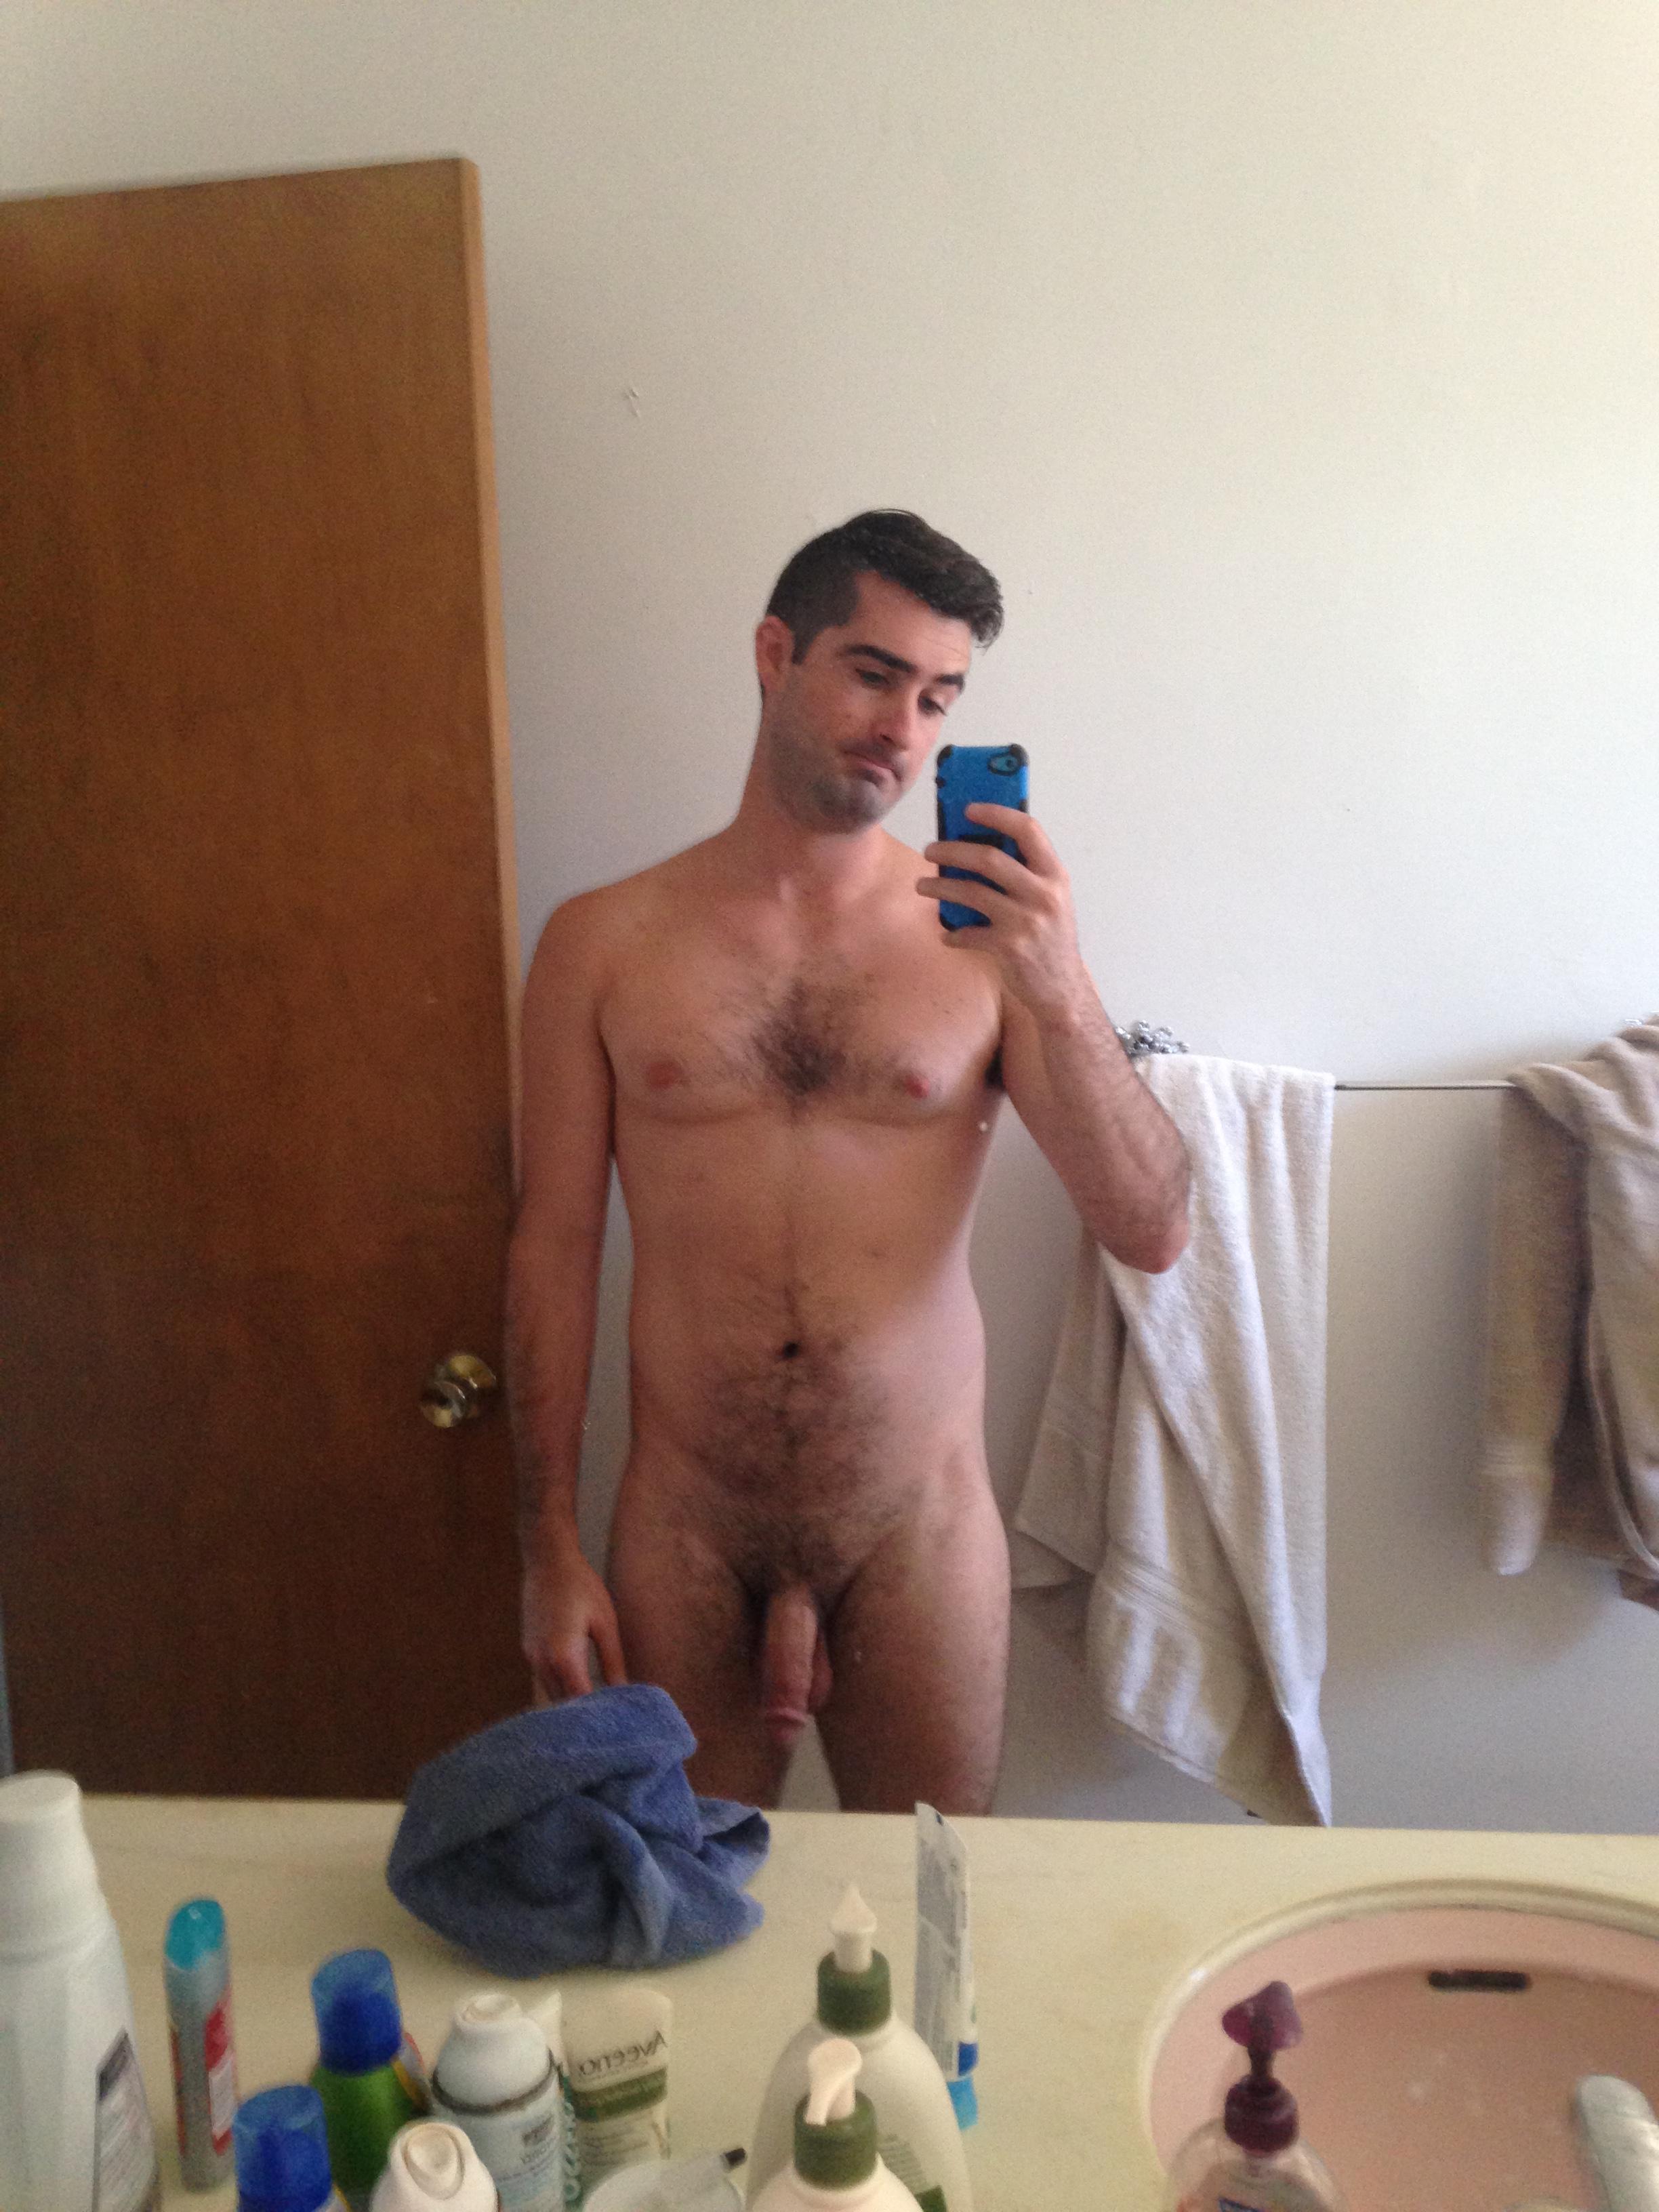 ashley markovich share candid nude men photos